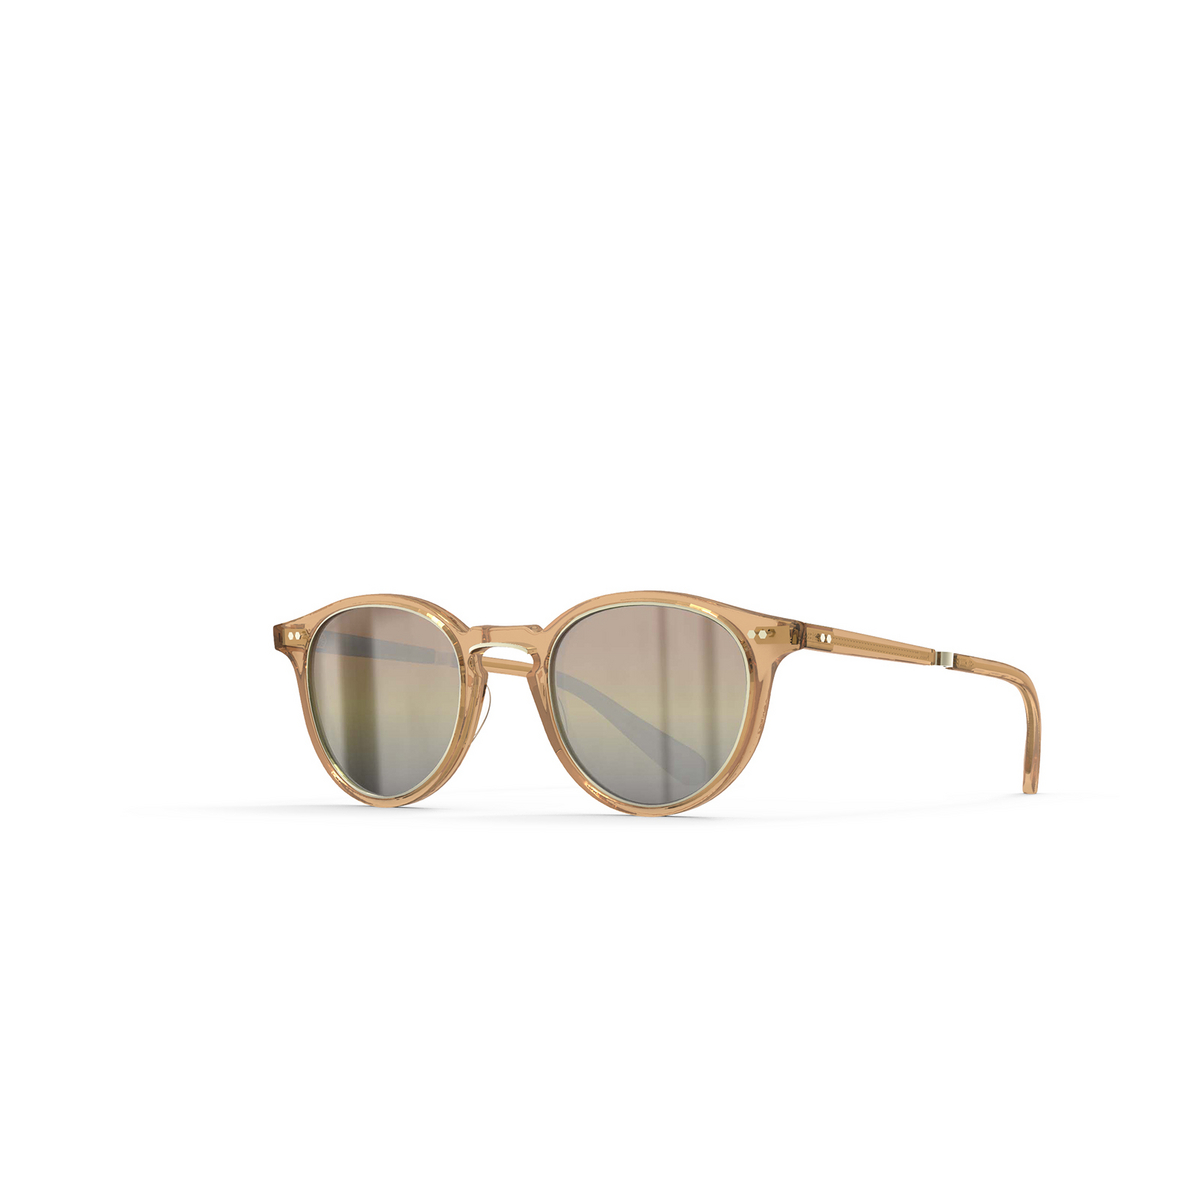 Mr. Leight® Round Sunglasses: Marmont Ii S color Topaz-12k White Gold/smokey TOP-12KG/SMKY - three-quarters view.